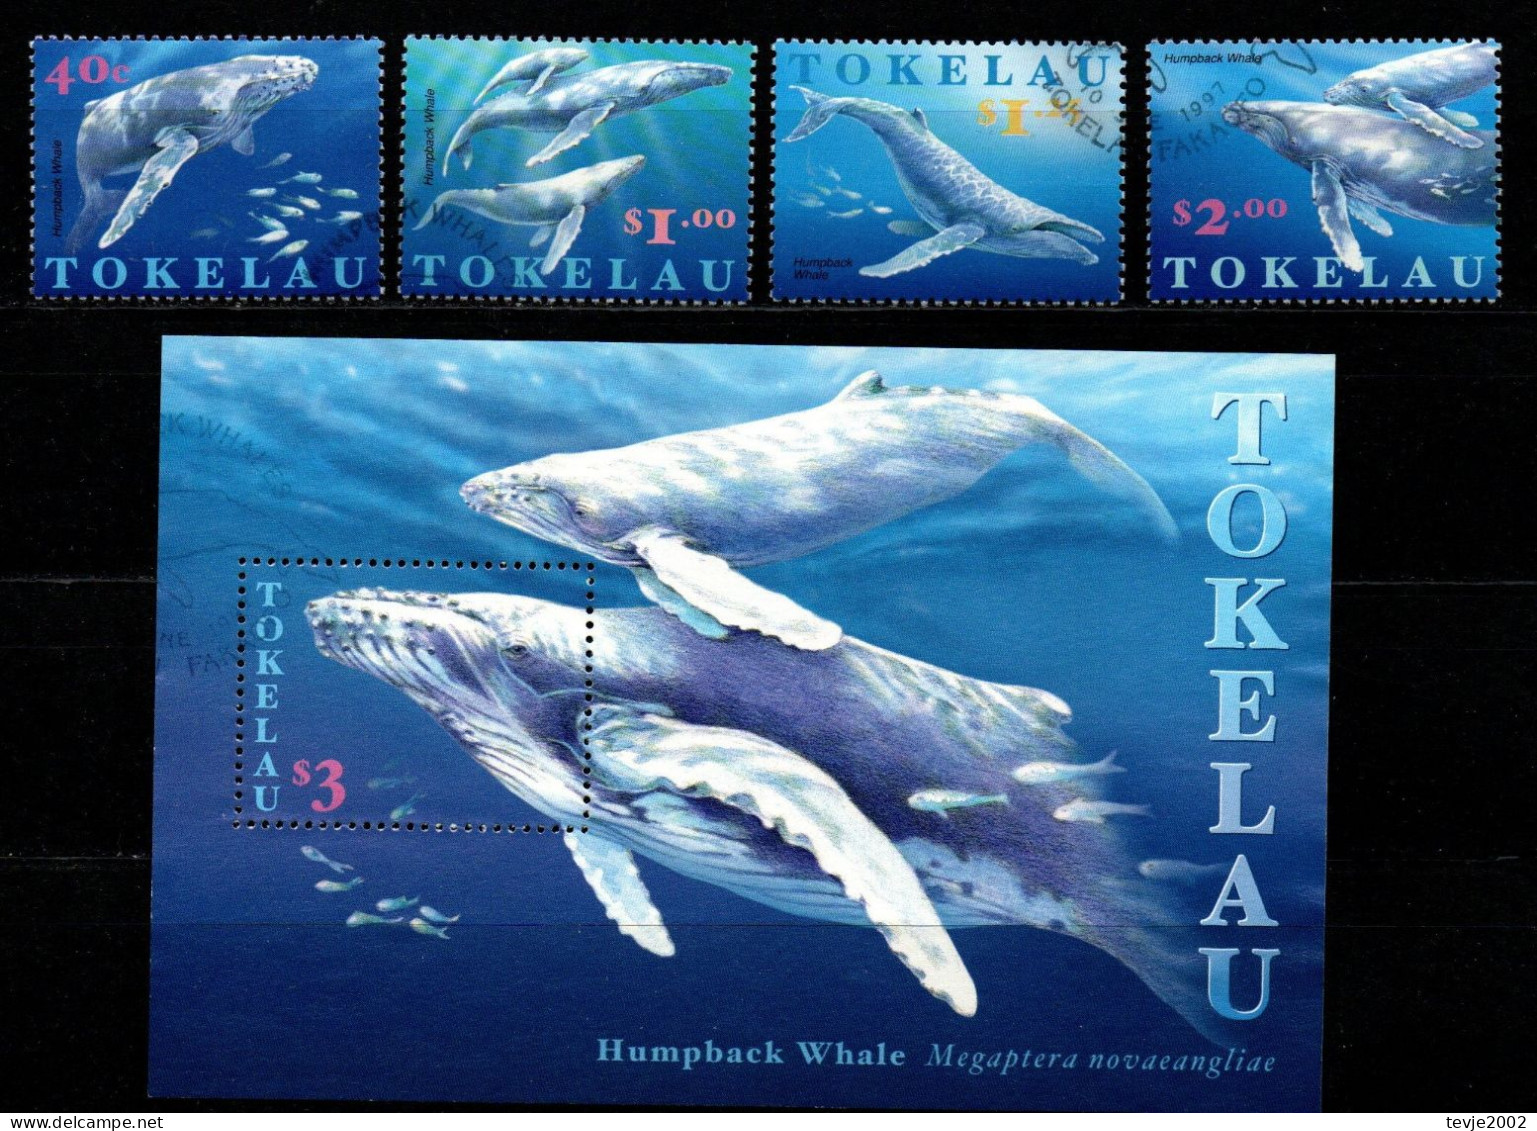 Tokelau 1997 - Mi.Nr. 224 - 247 + Block 11 - Gestempelt Used - Tiere Animals Wale Whales - Ballenas